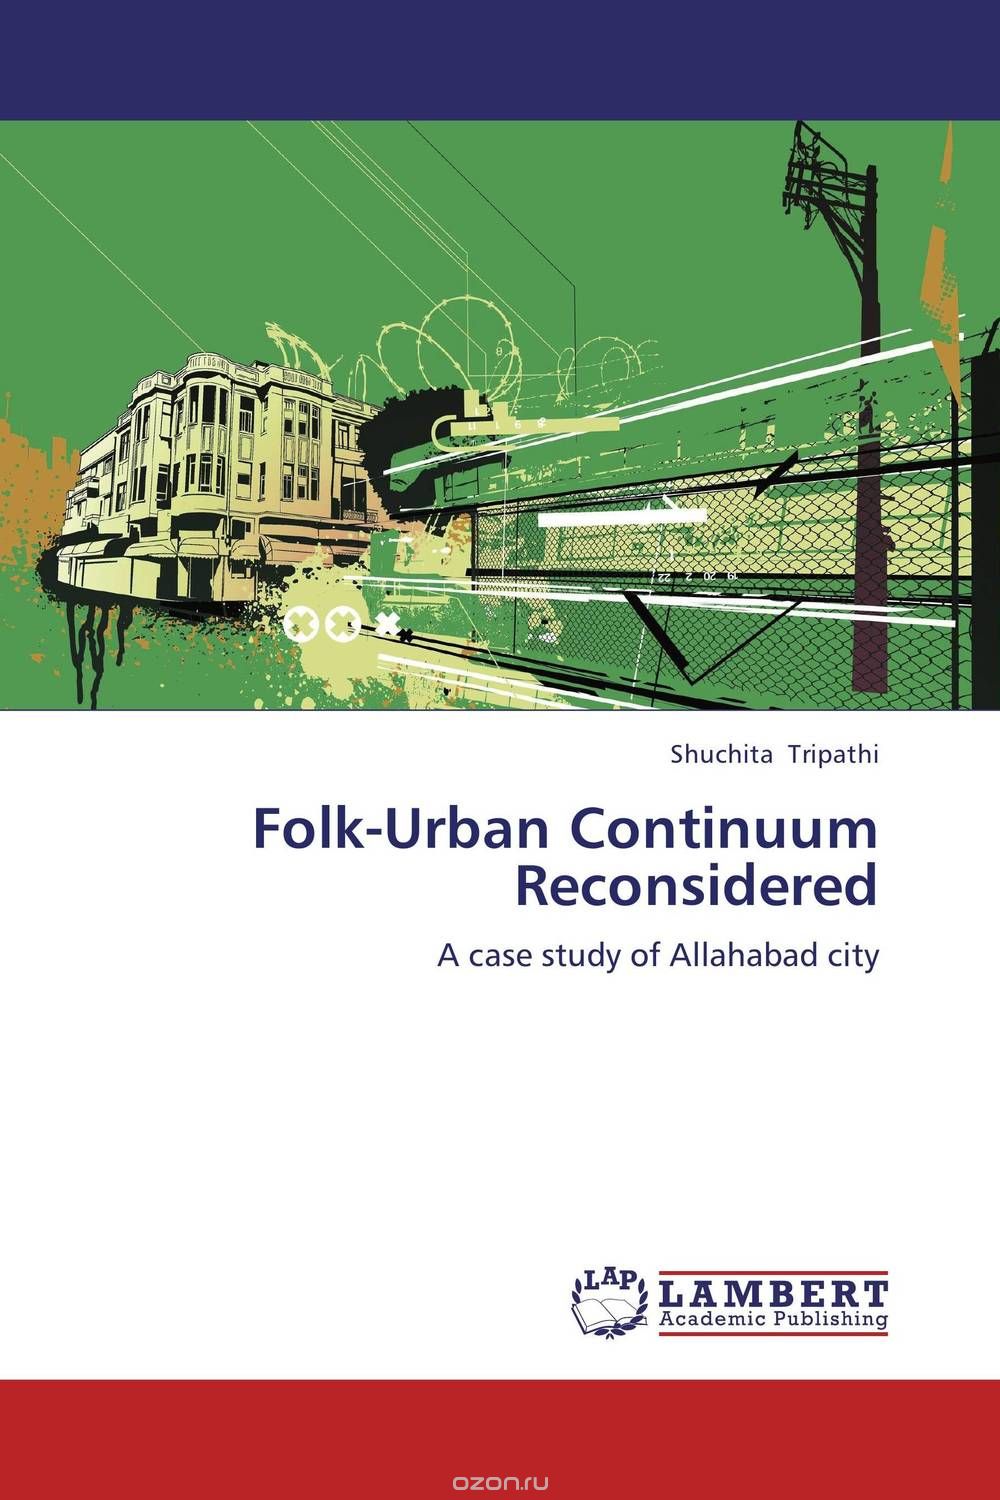 Скачать книгу "Folk-Urban Continuum Reconsidered"